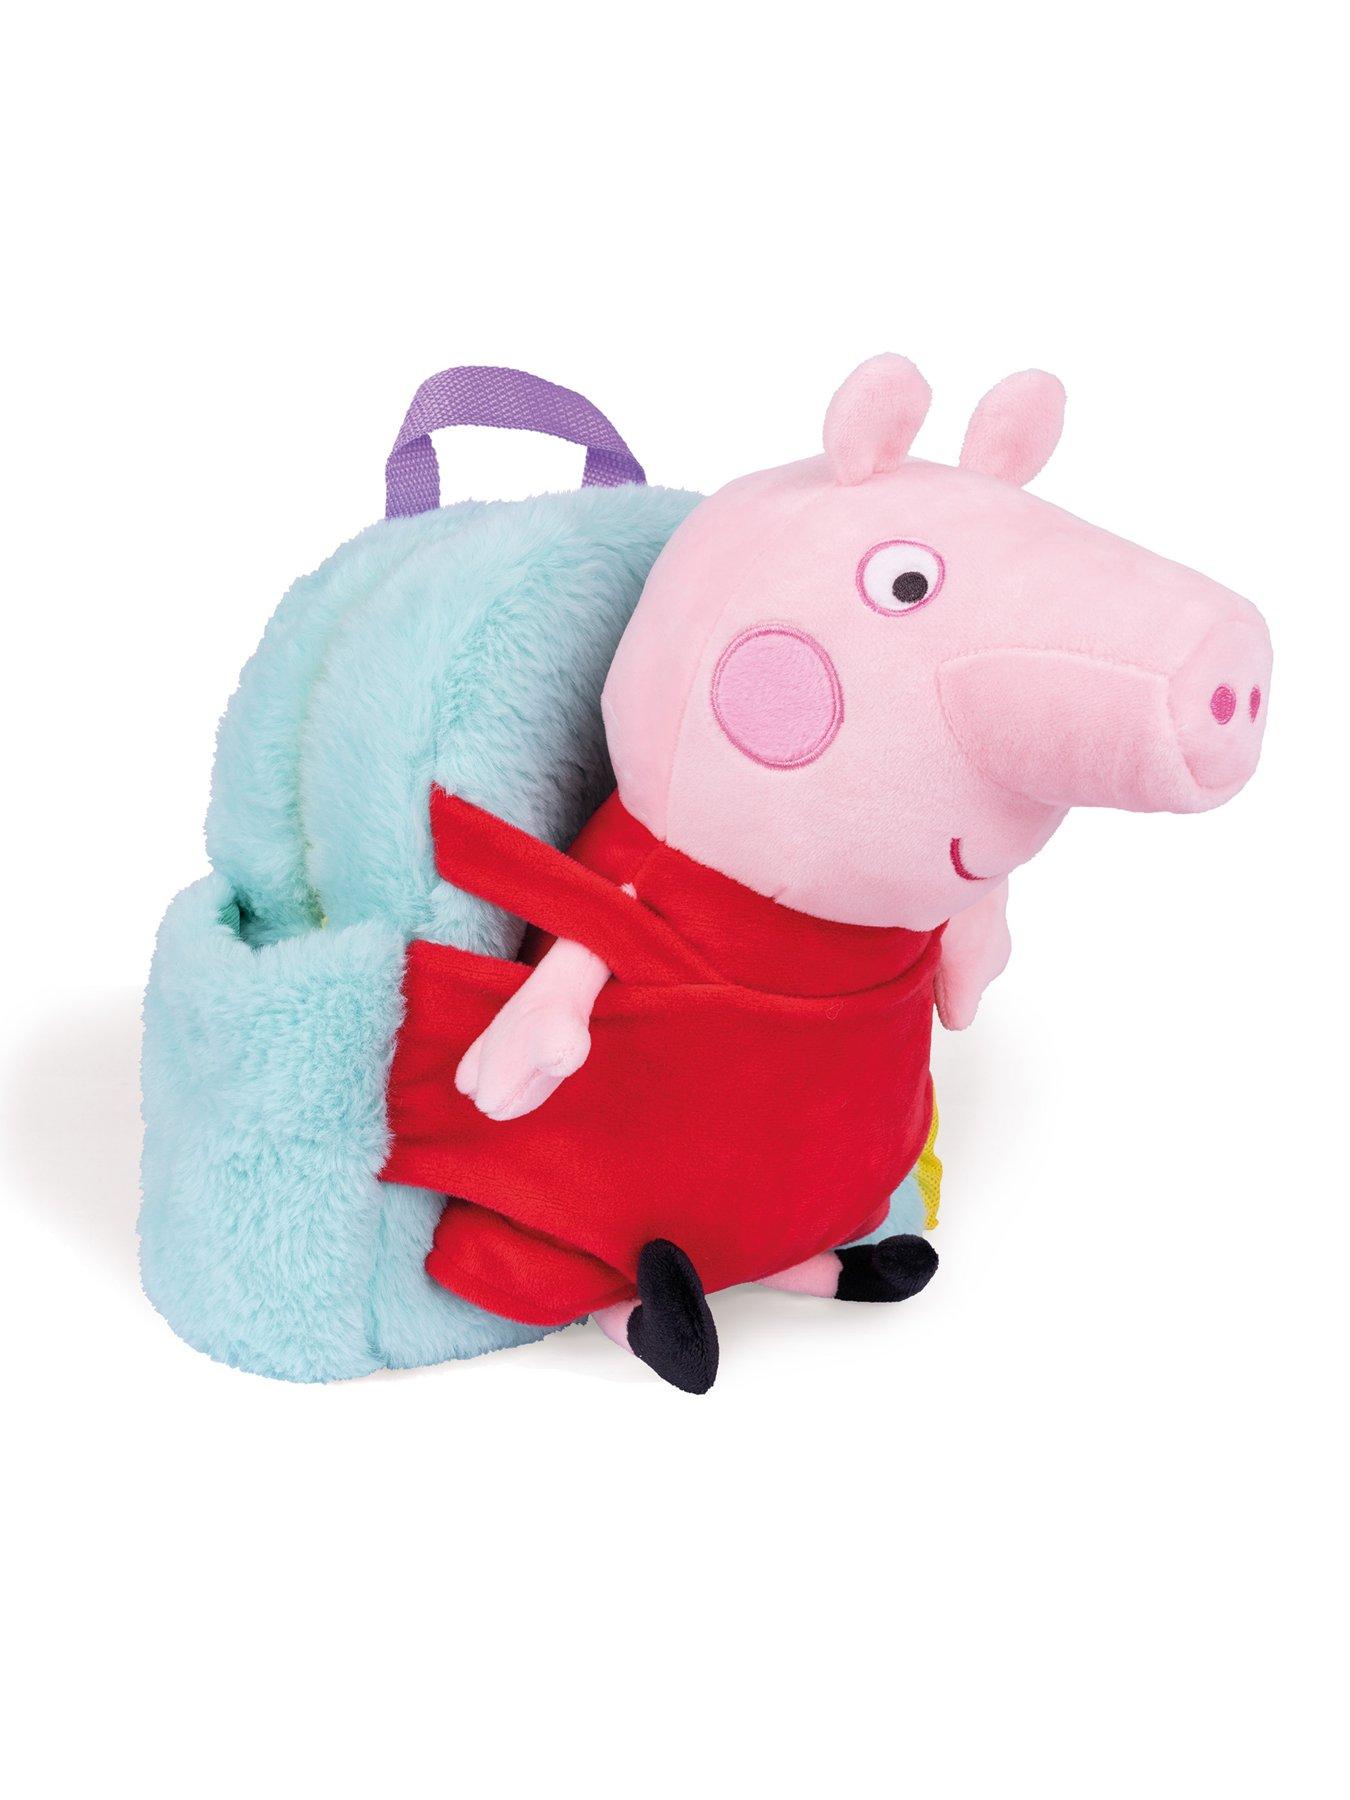 Peppa Pig's Fold-n-Carry House w/ Furniture, Camper Van, Train, & 5  Characters